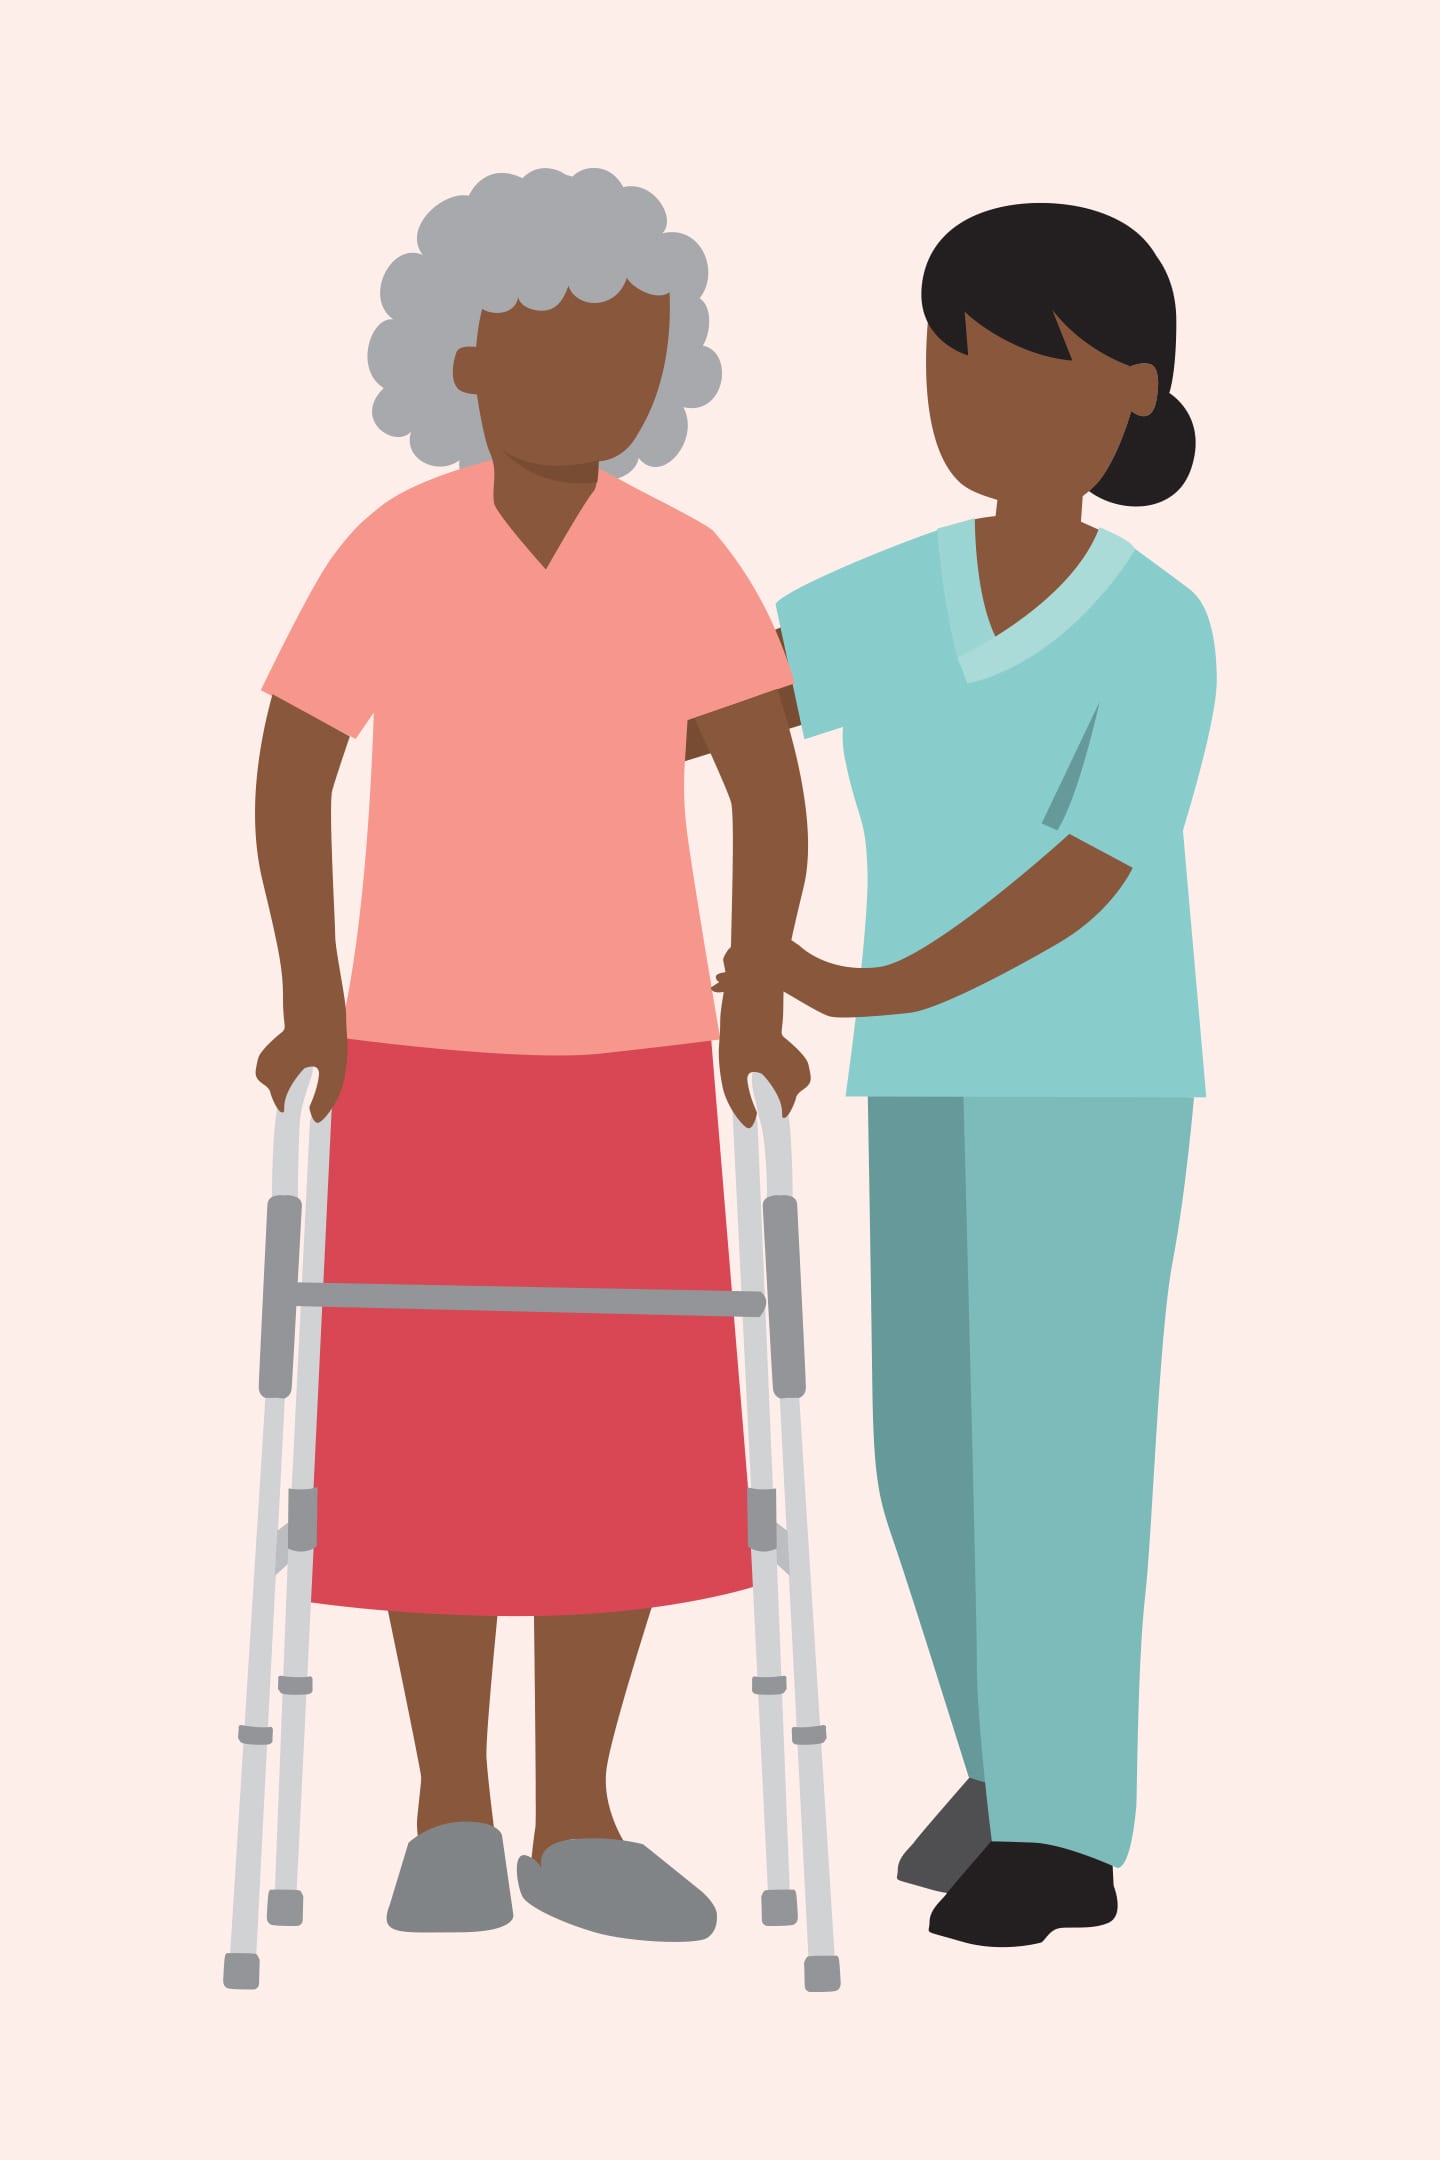 Illustration of palliative care nurse helping elderly woman with walker